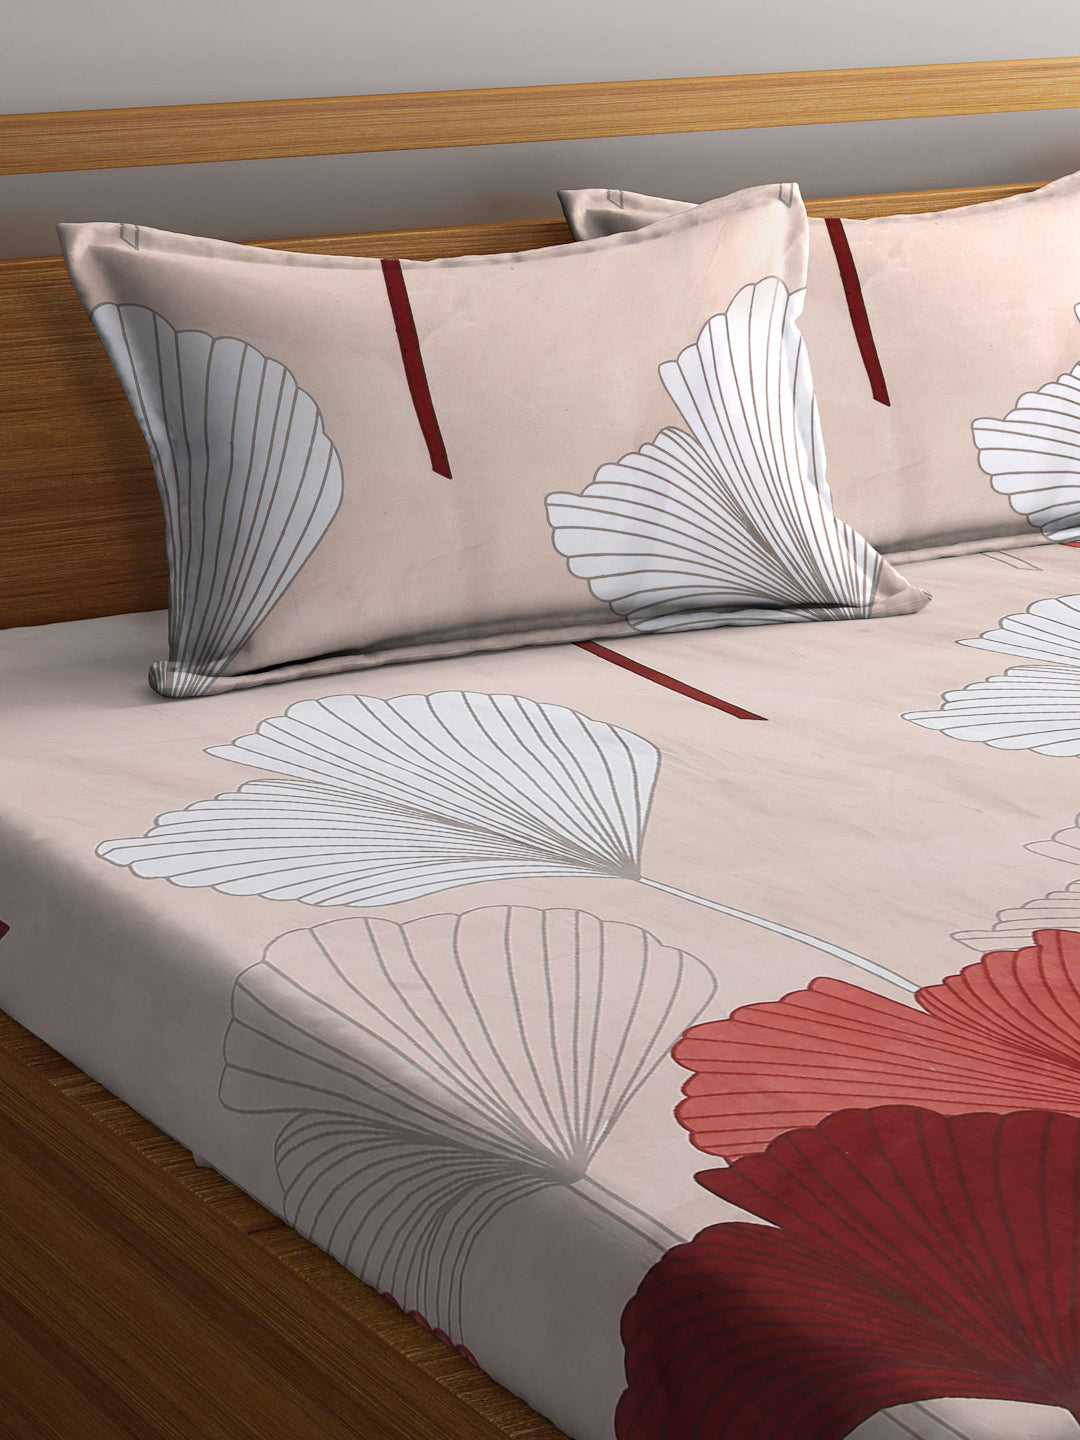 Arrabi Brown Floral TC Cotton Blend Double Size Bedsheet with 2 Pillow Covers (250 x 215 cm)